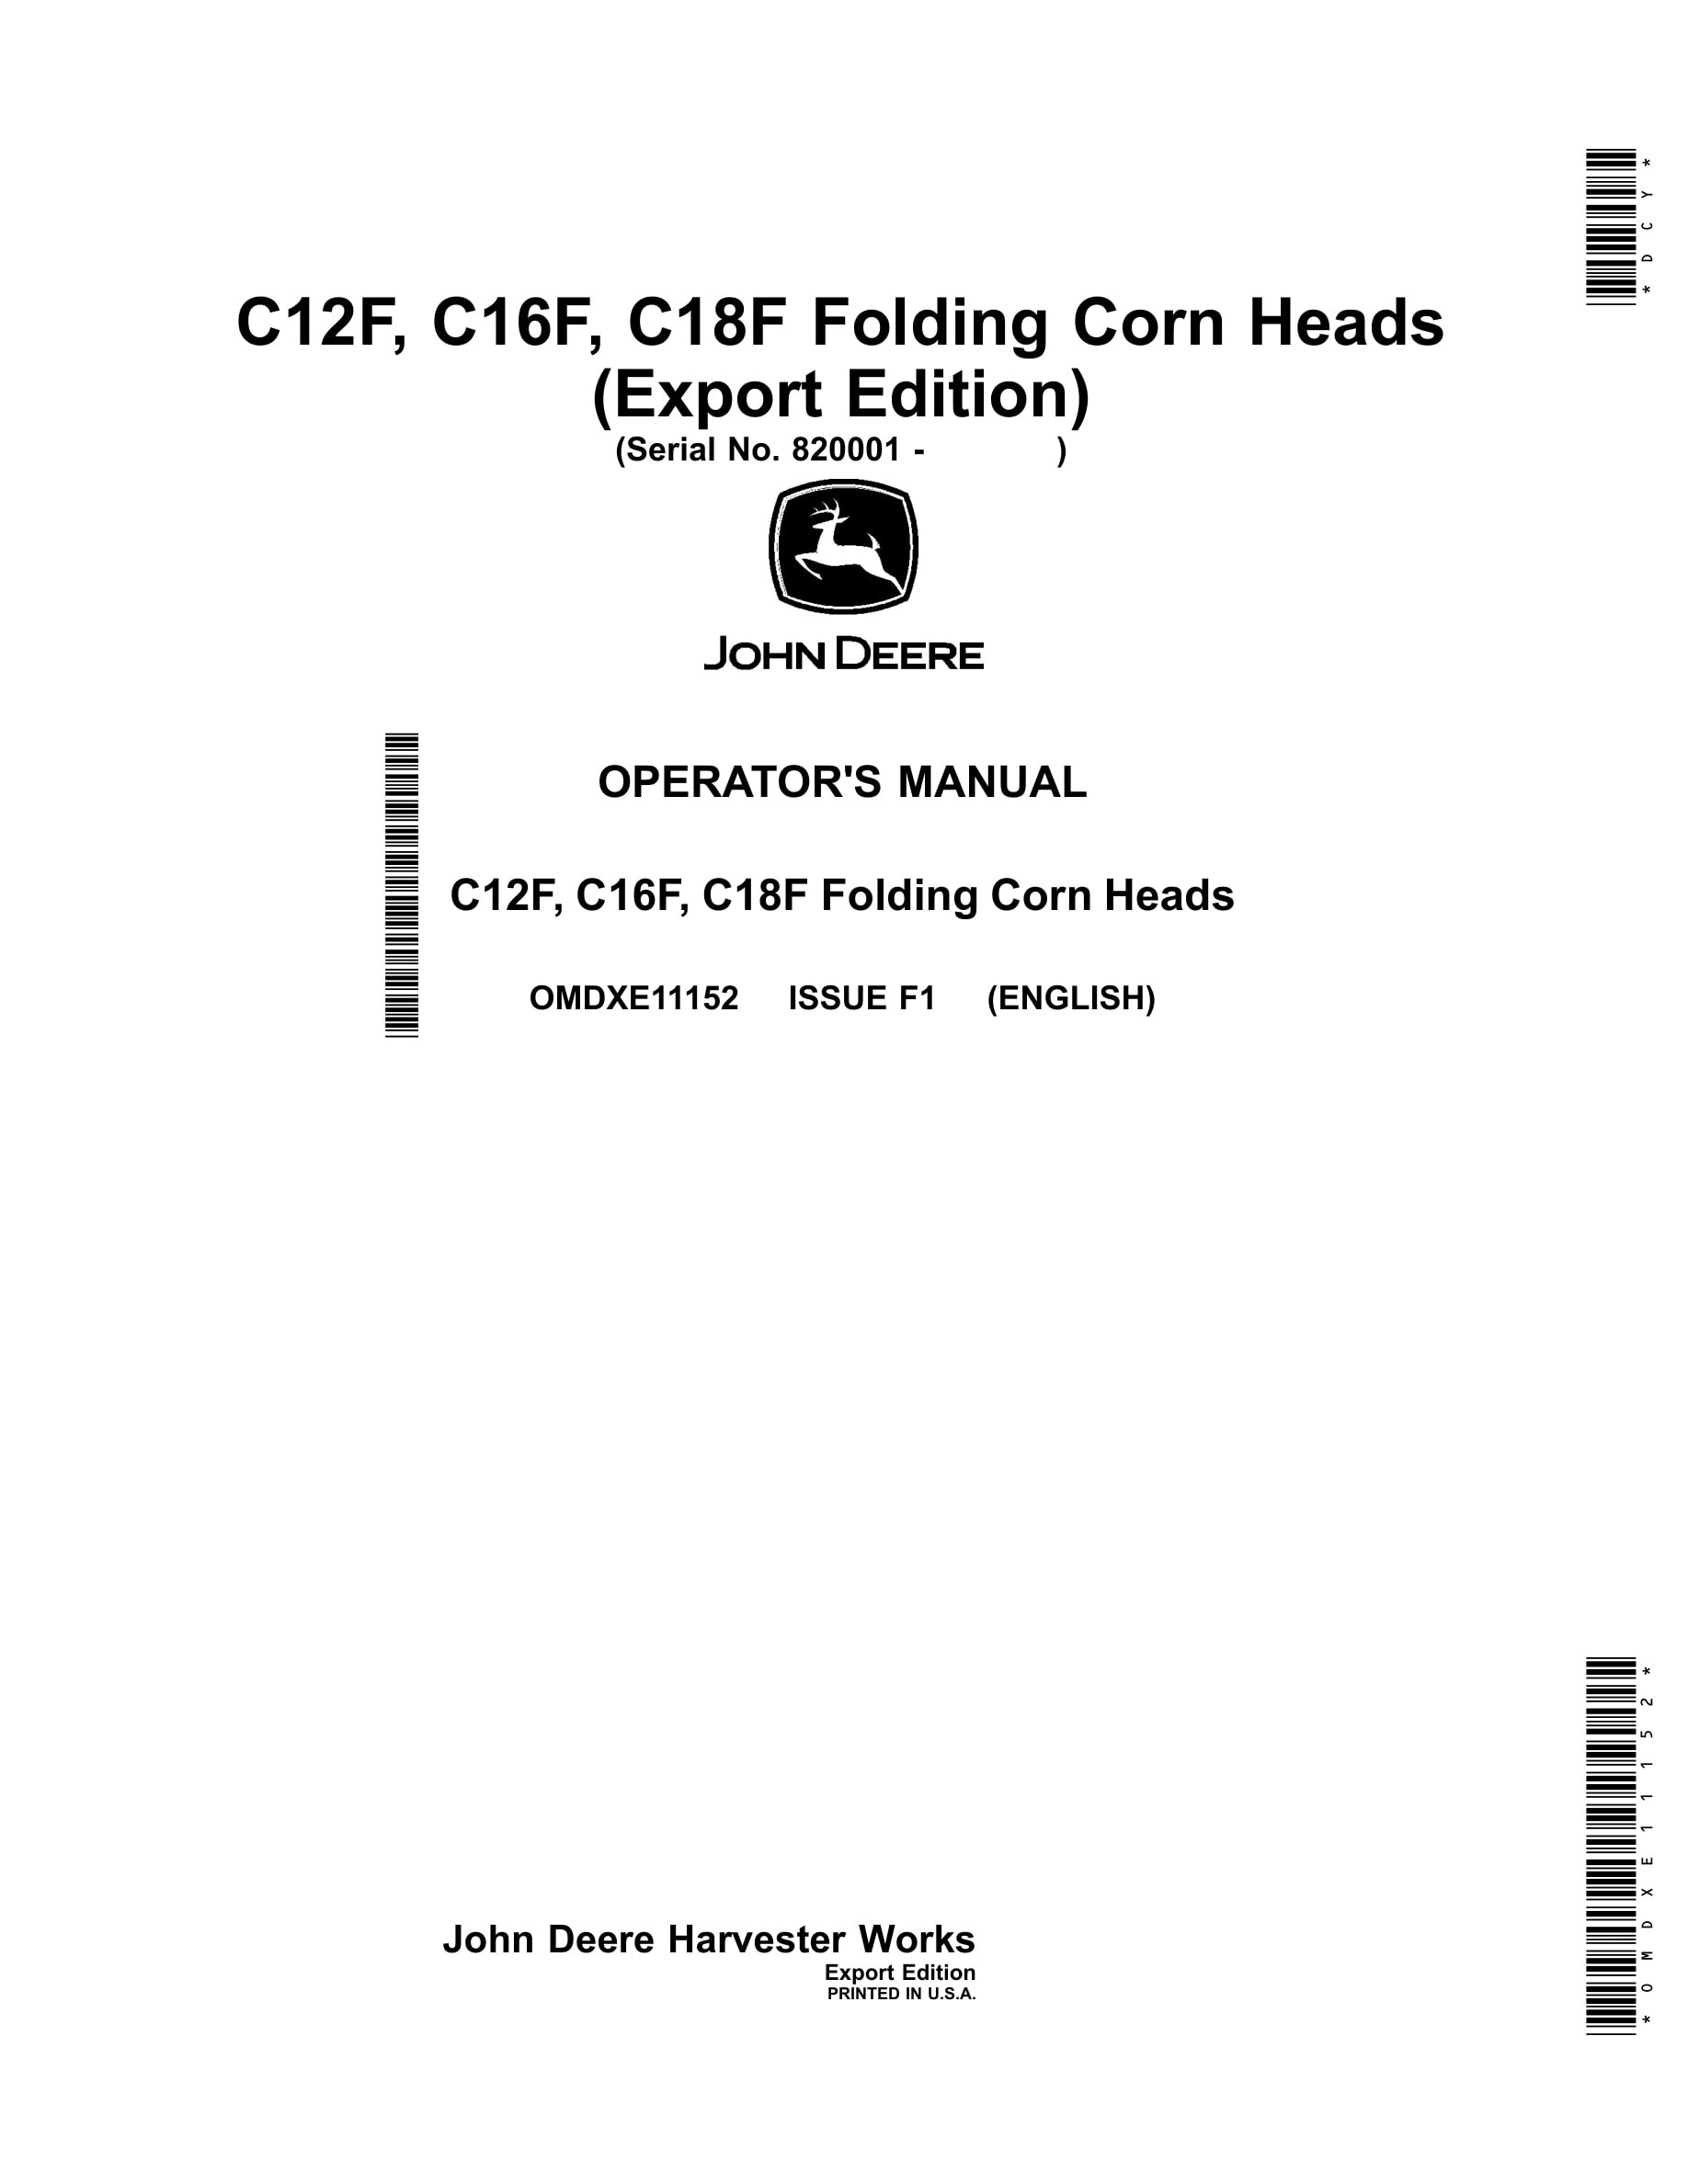 John Deere C12F, C16F, C18F Folding Corn Heads Operator Manual OMDXE11152-1